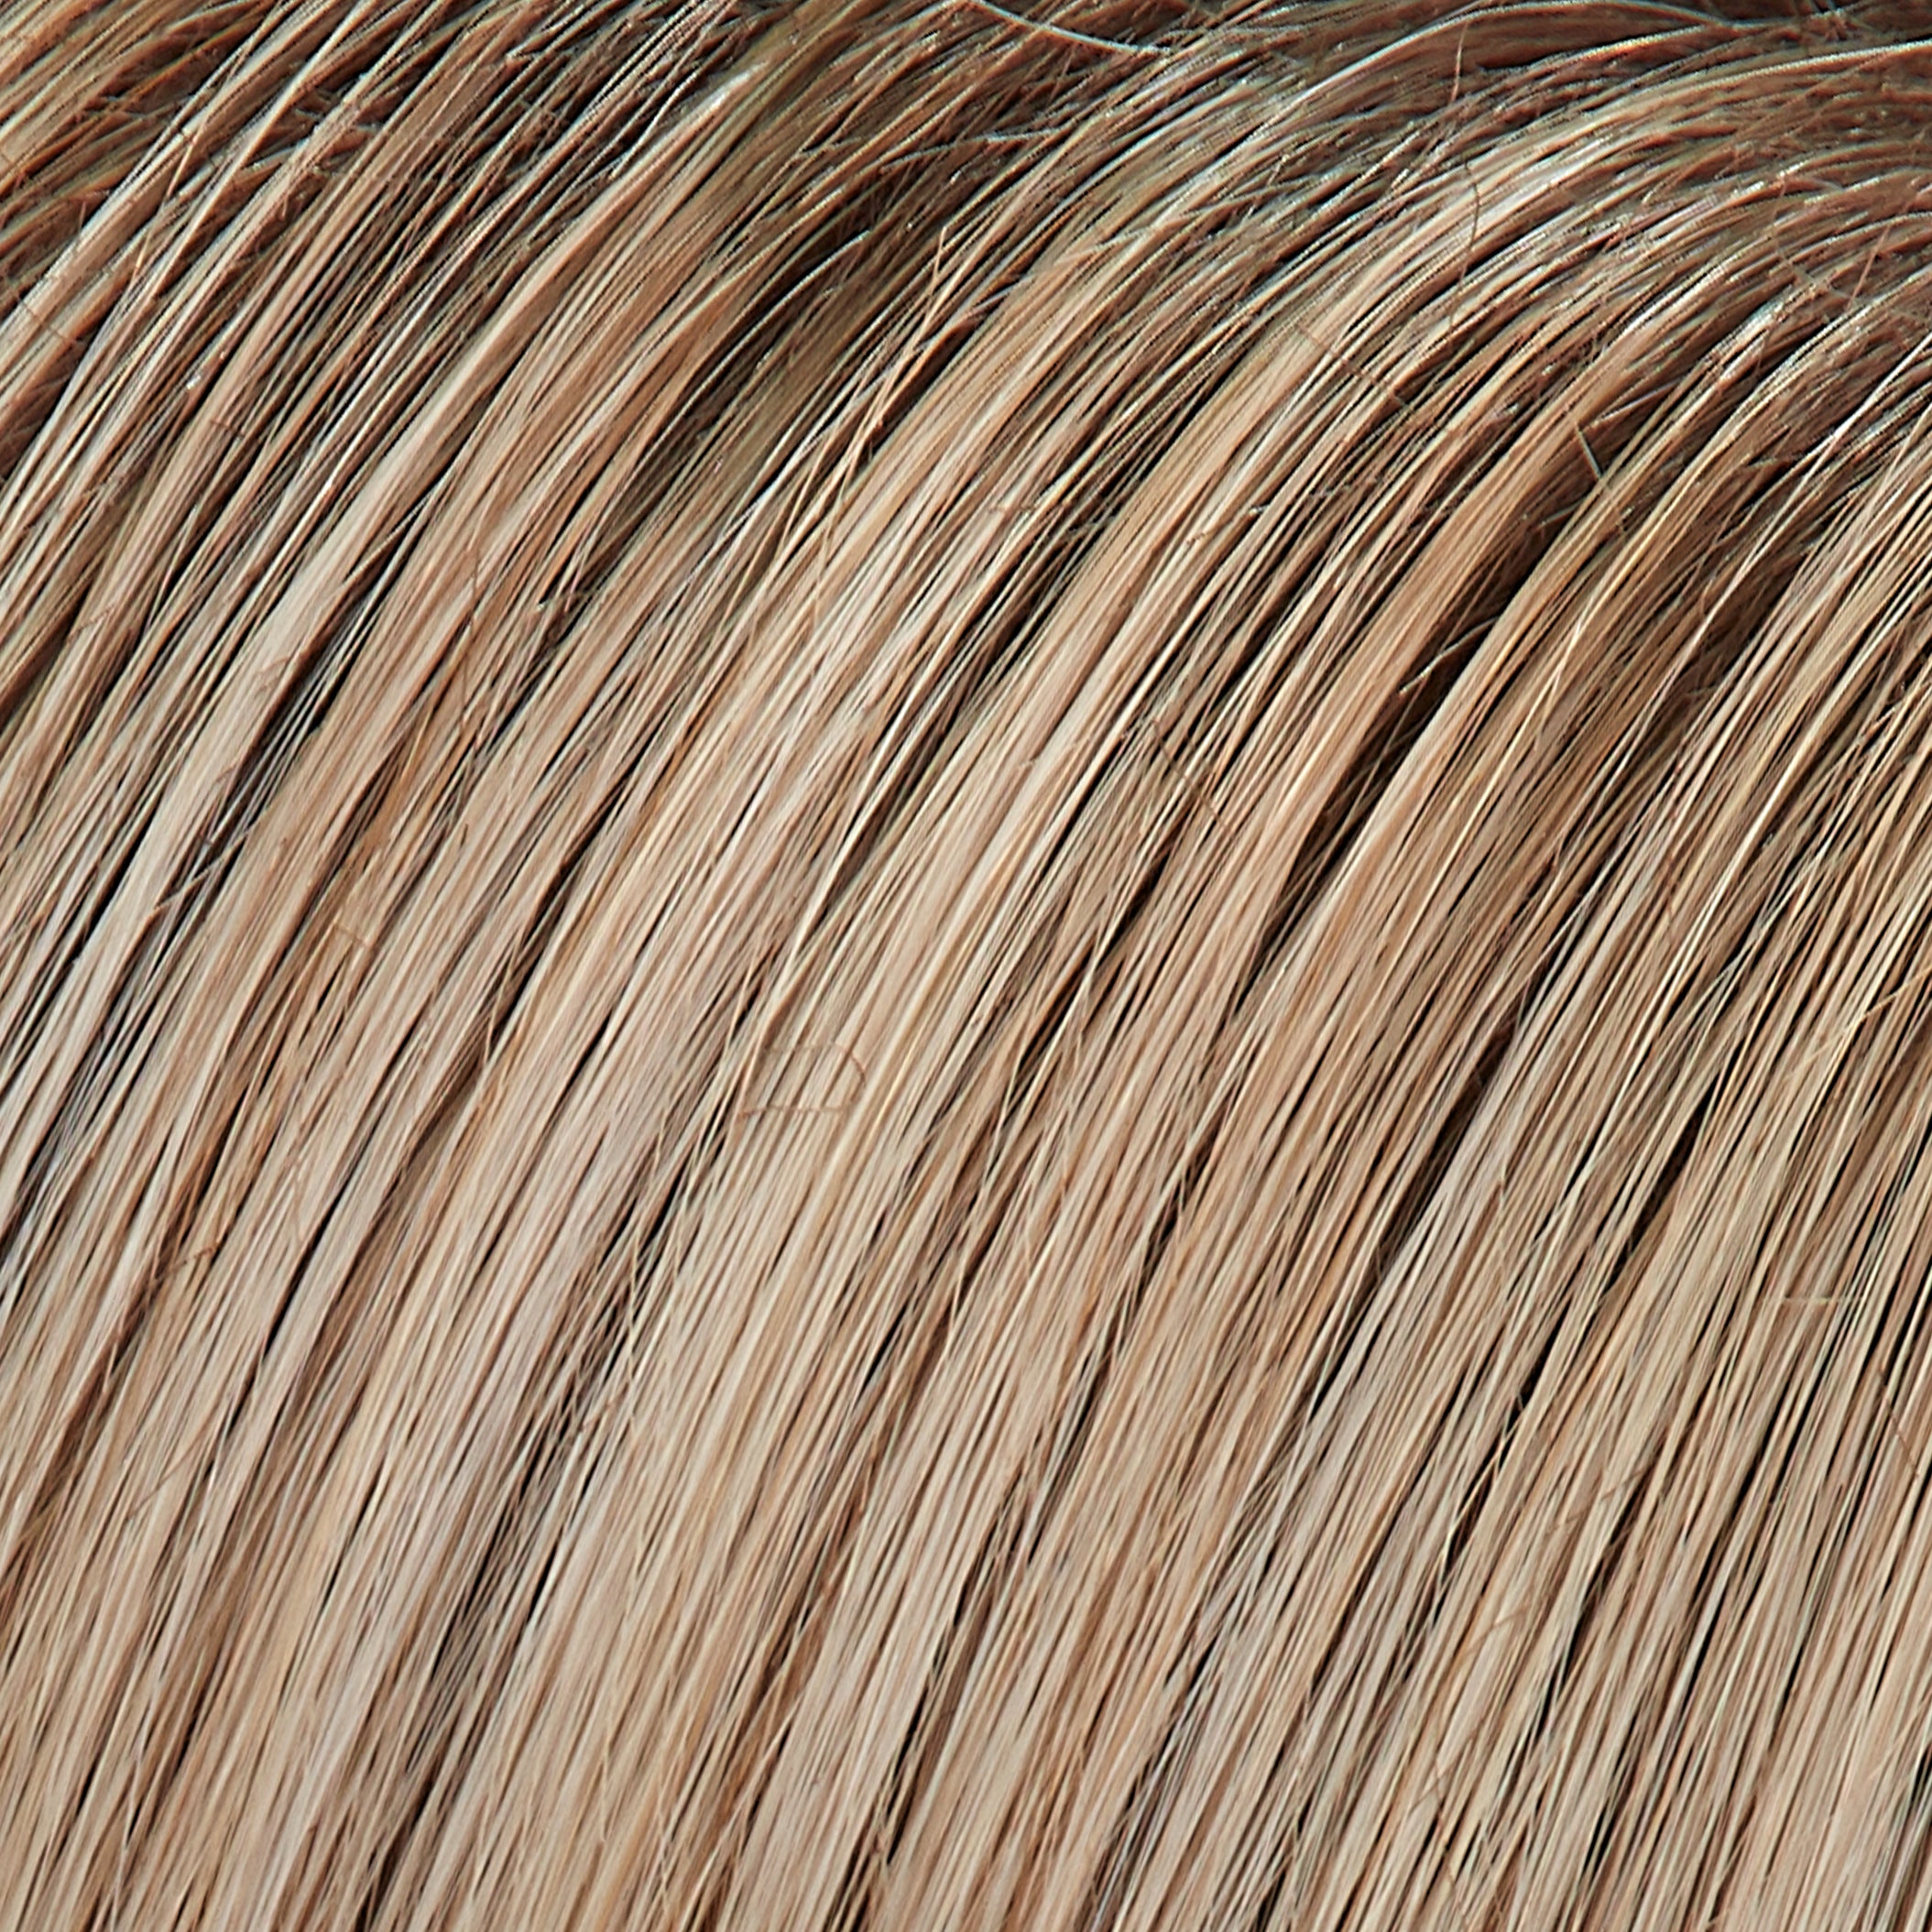 Ignite Petite wig - Jon Renau HD Collection